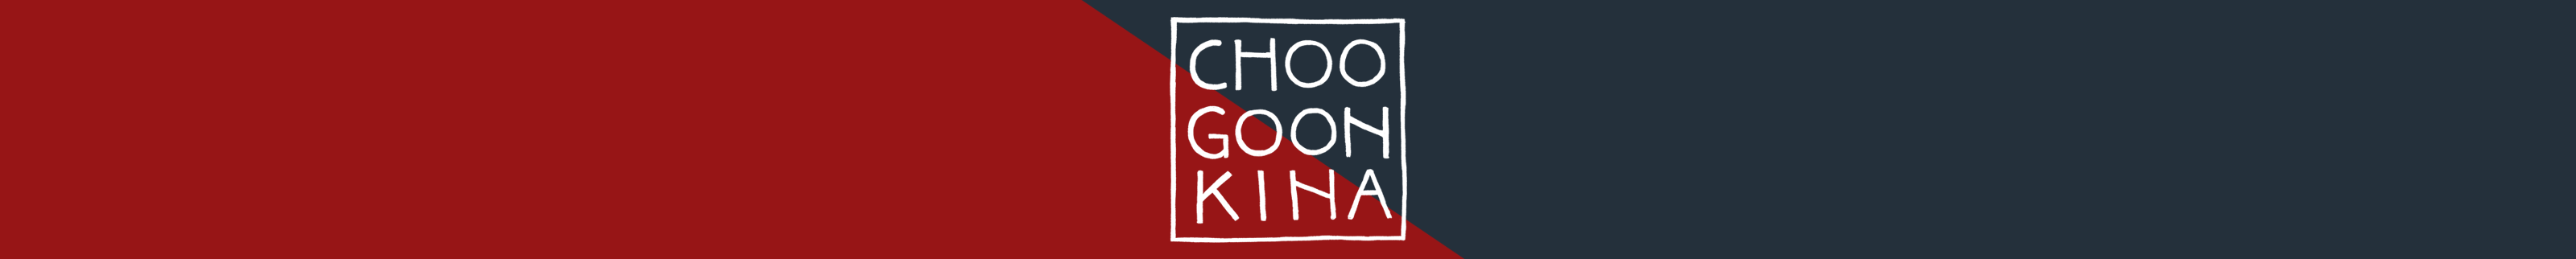 Kato Choogoonkina 的个人资料横幅